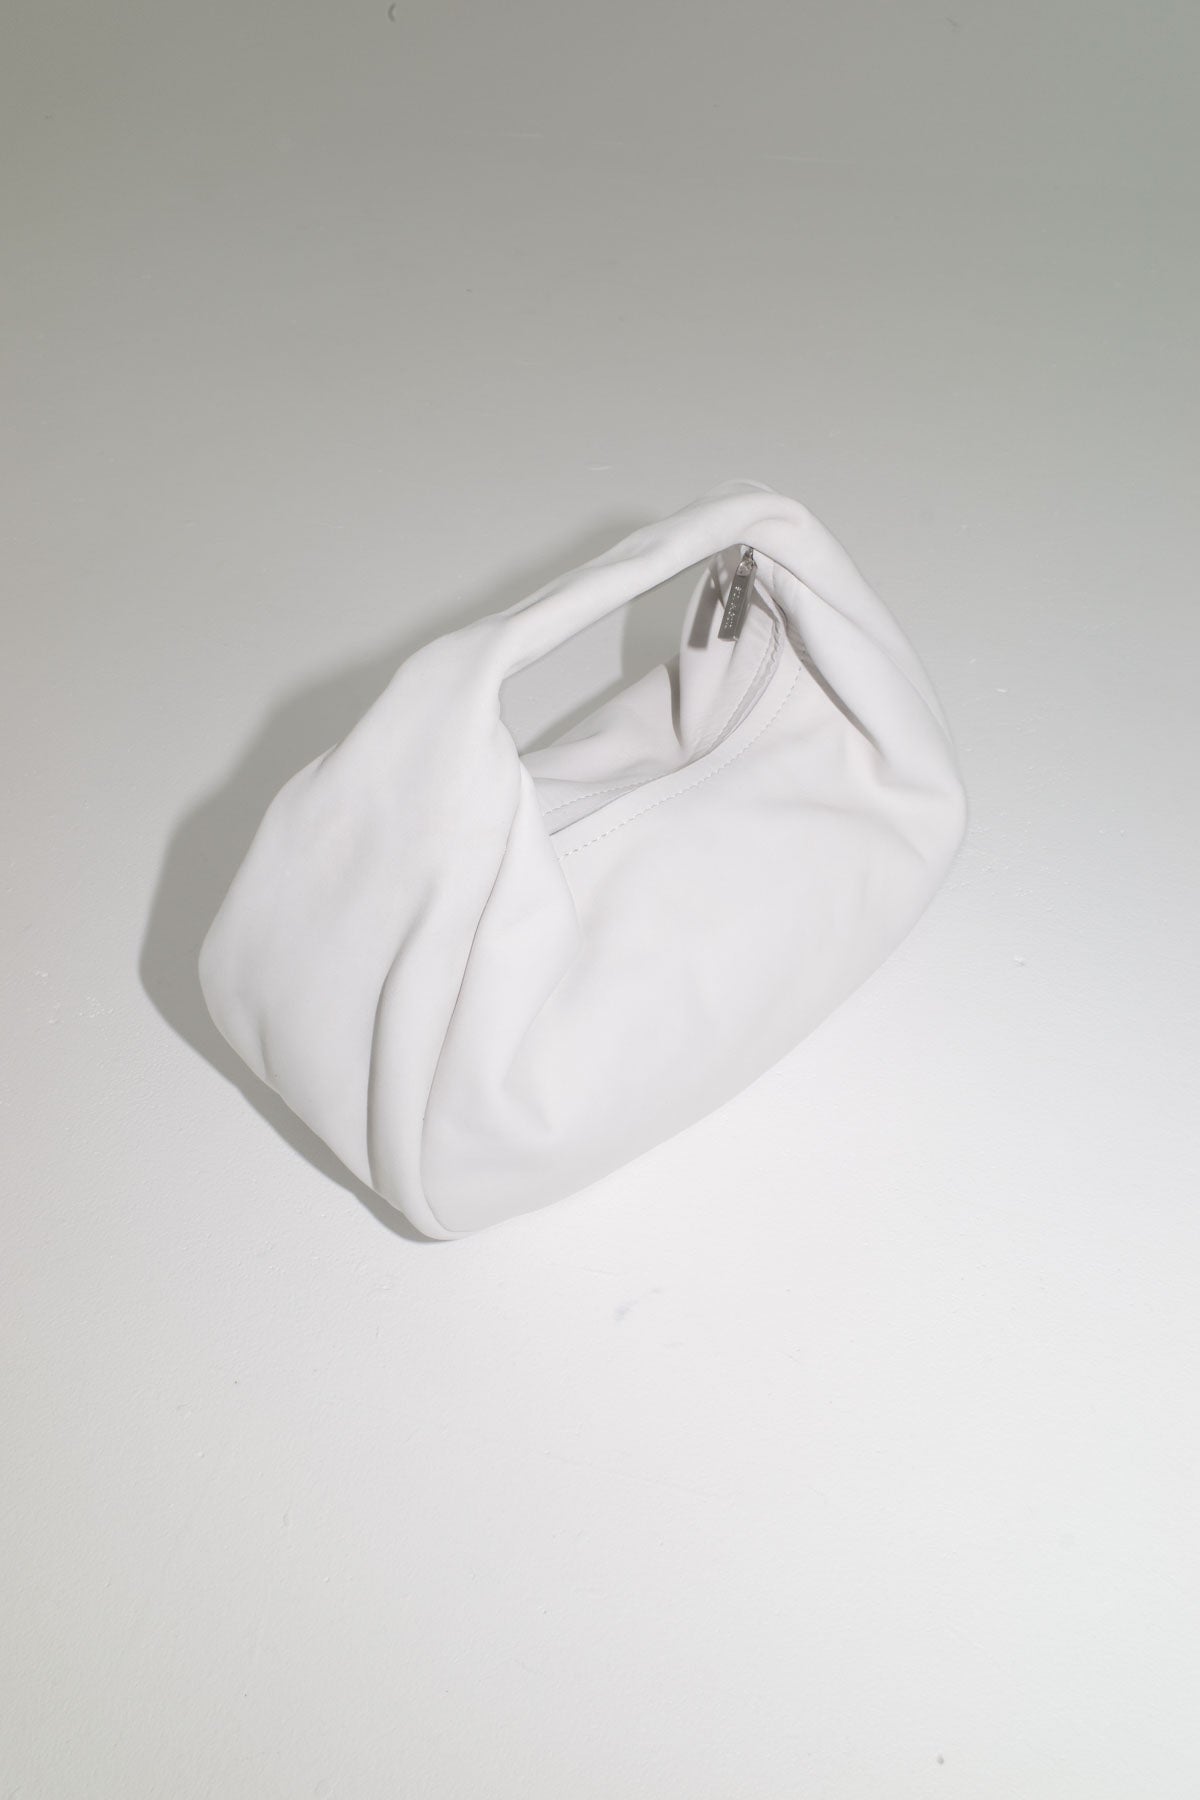 The St Agni Bon Bon Bag in Cool White available at The New Trend Australia